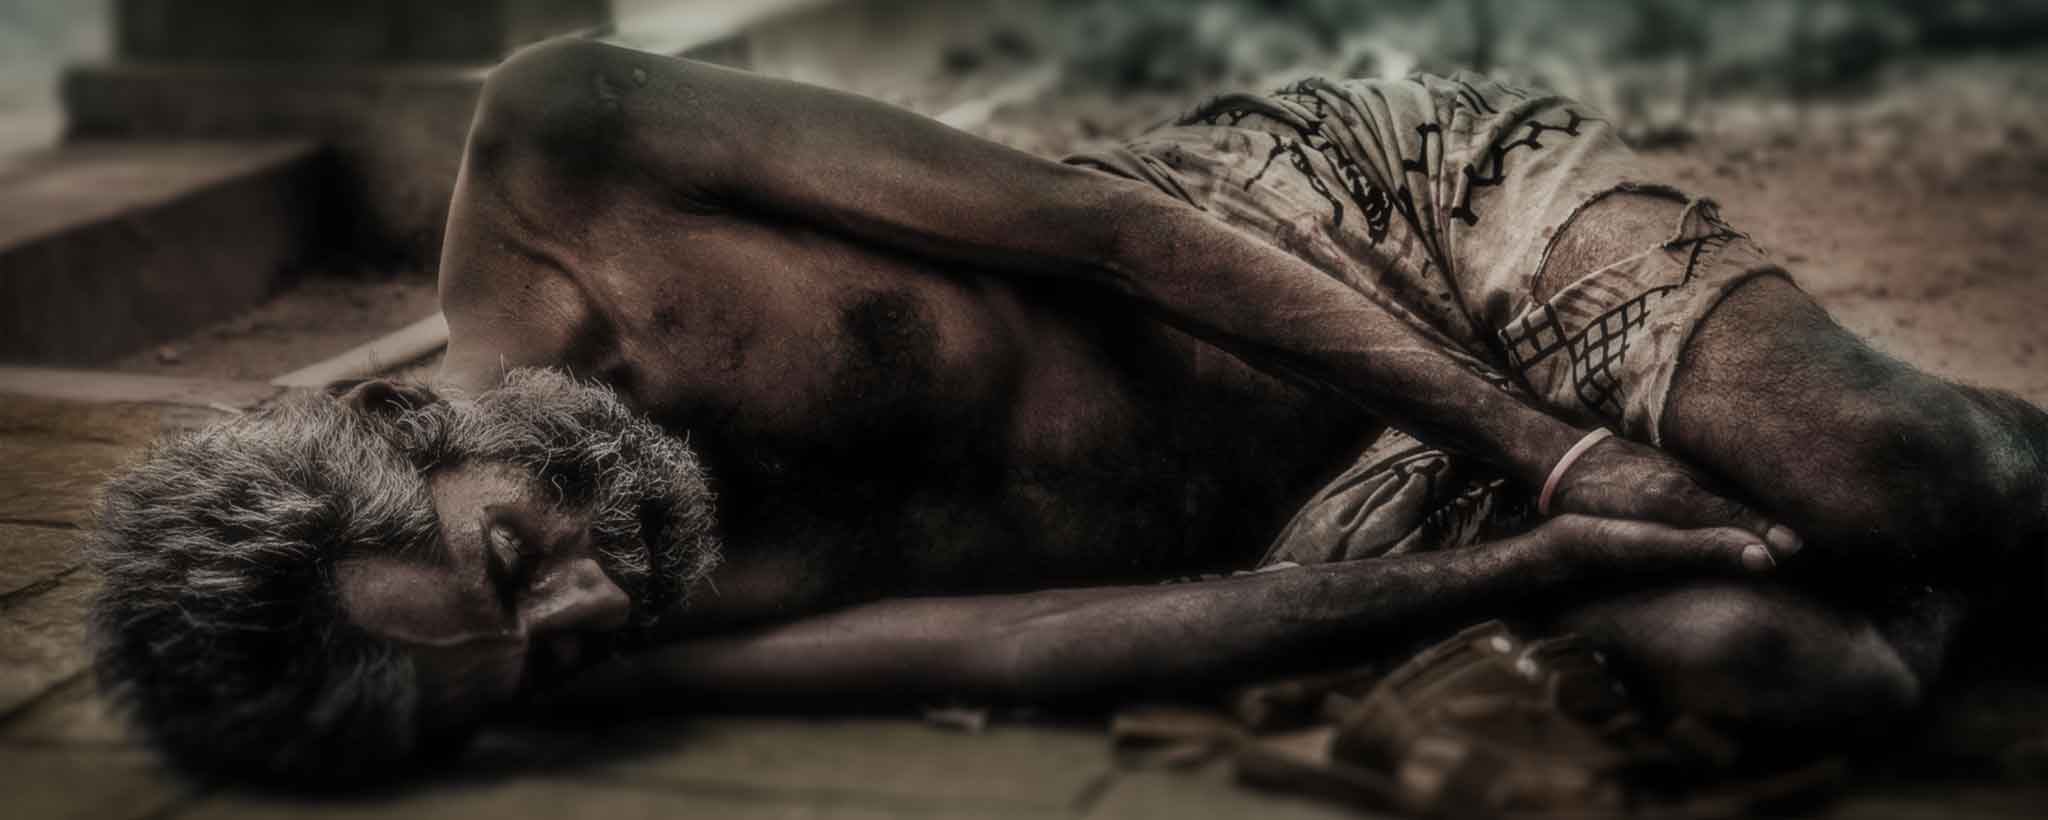 'Homeless man laying on street'